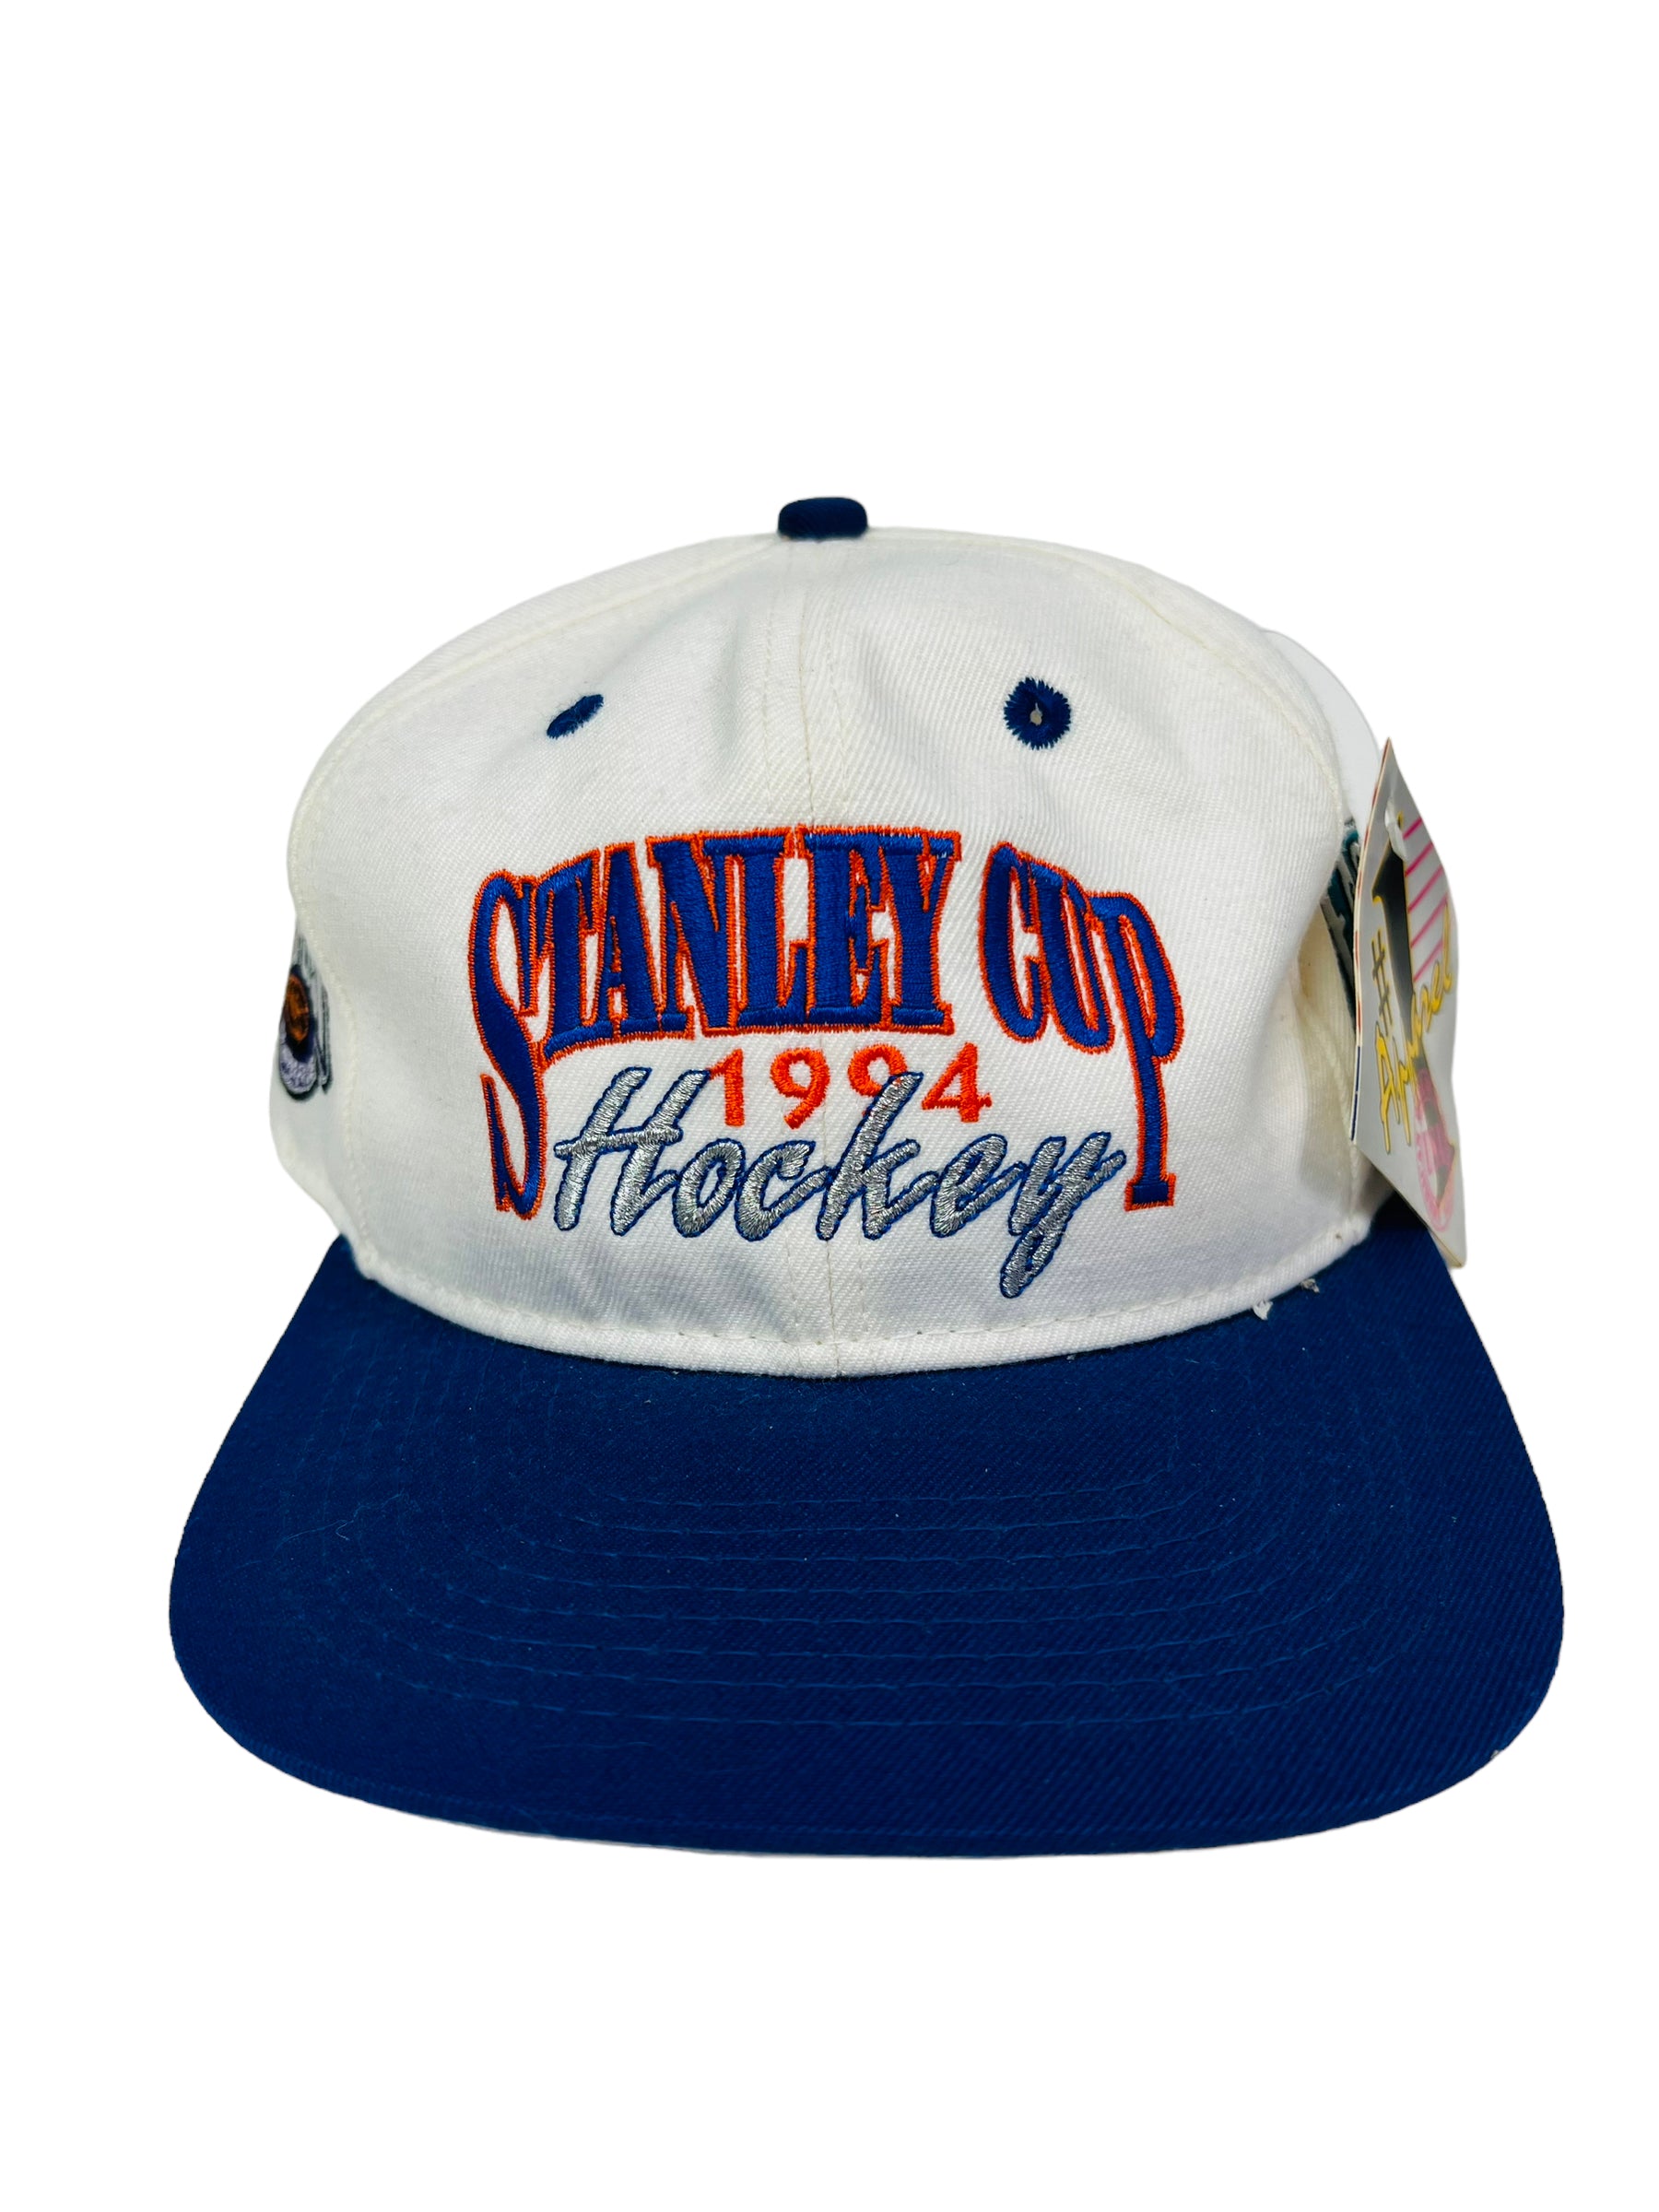 Vintage 1994 New York Rangers Jersey at